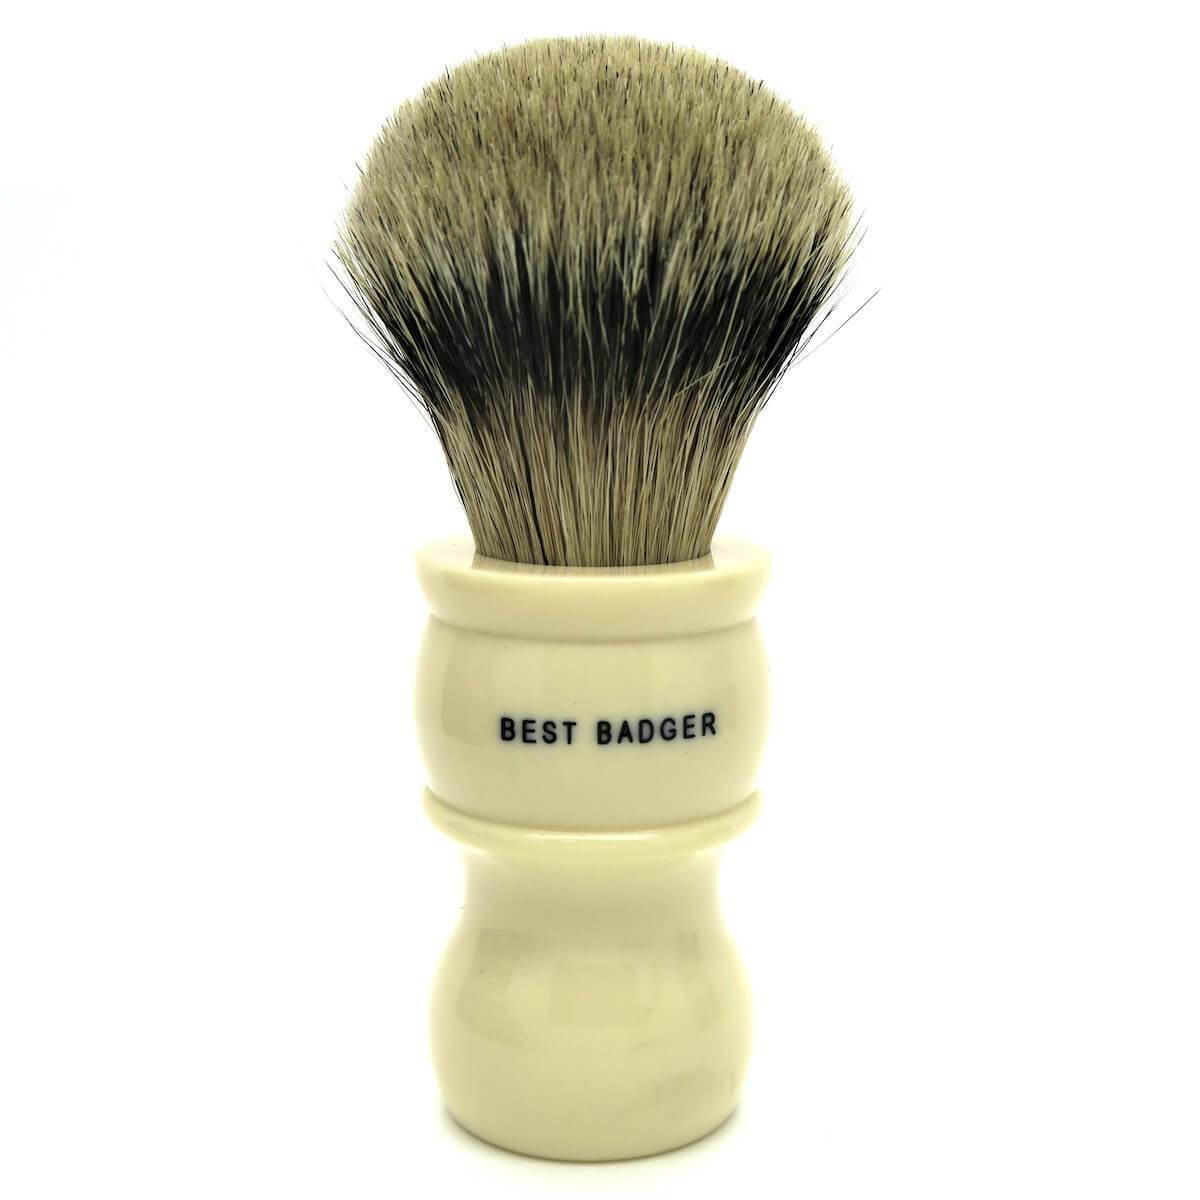 Product image 2 for Simpson M7 Best Badger Shaving Brush, Ivory